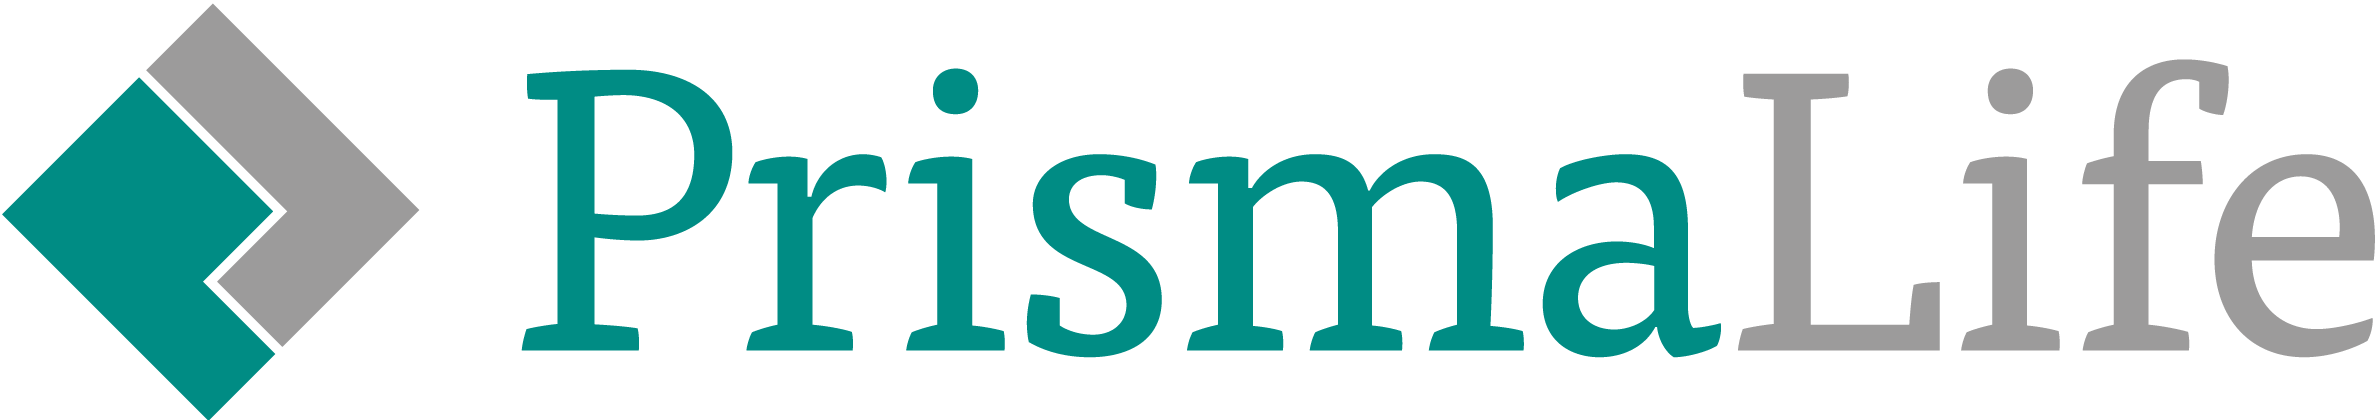 PrismaLife Logo